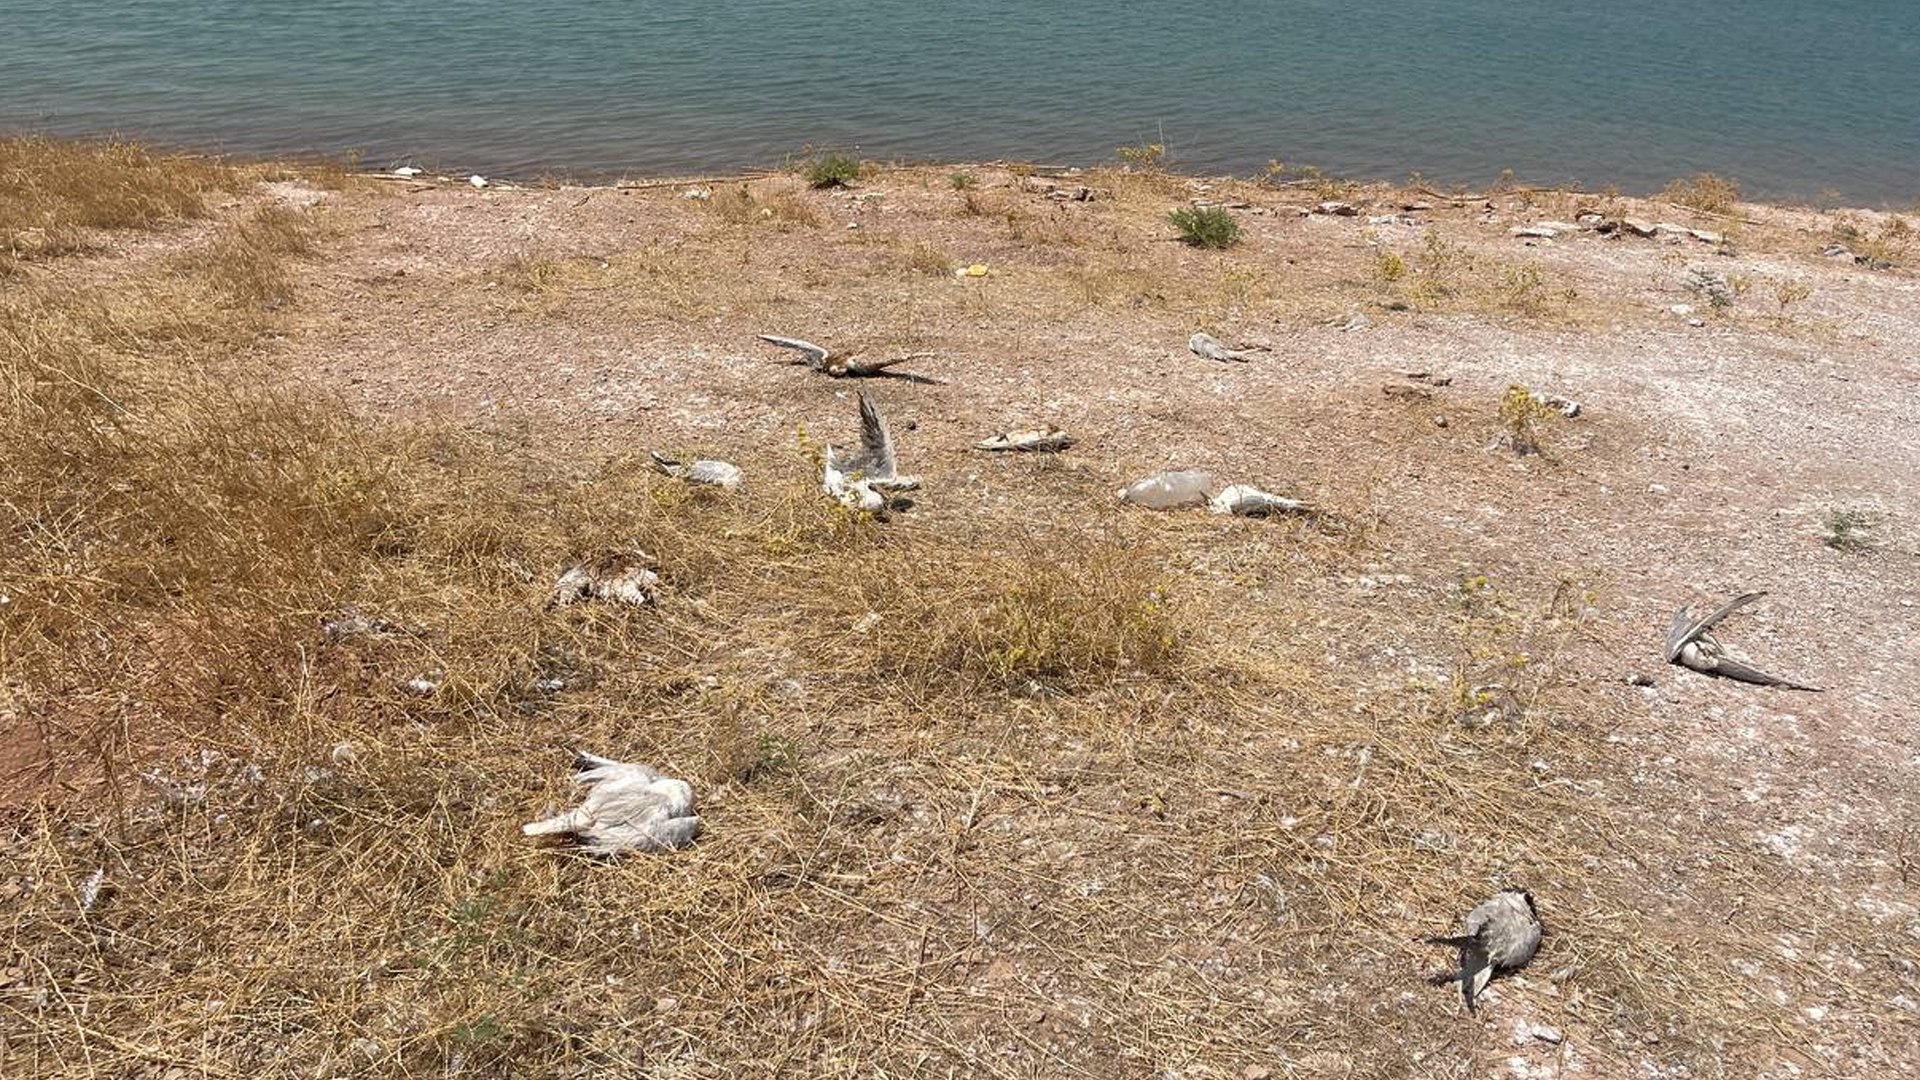 Mass gull deaths at Mosul Dam under investigation